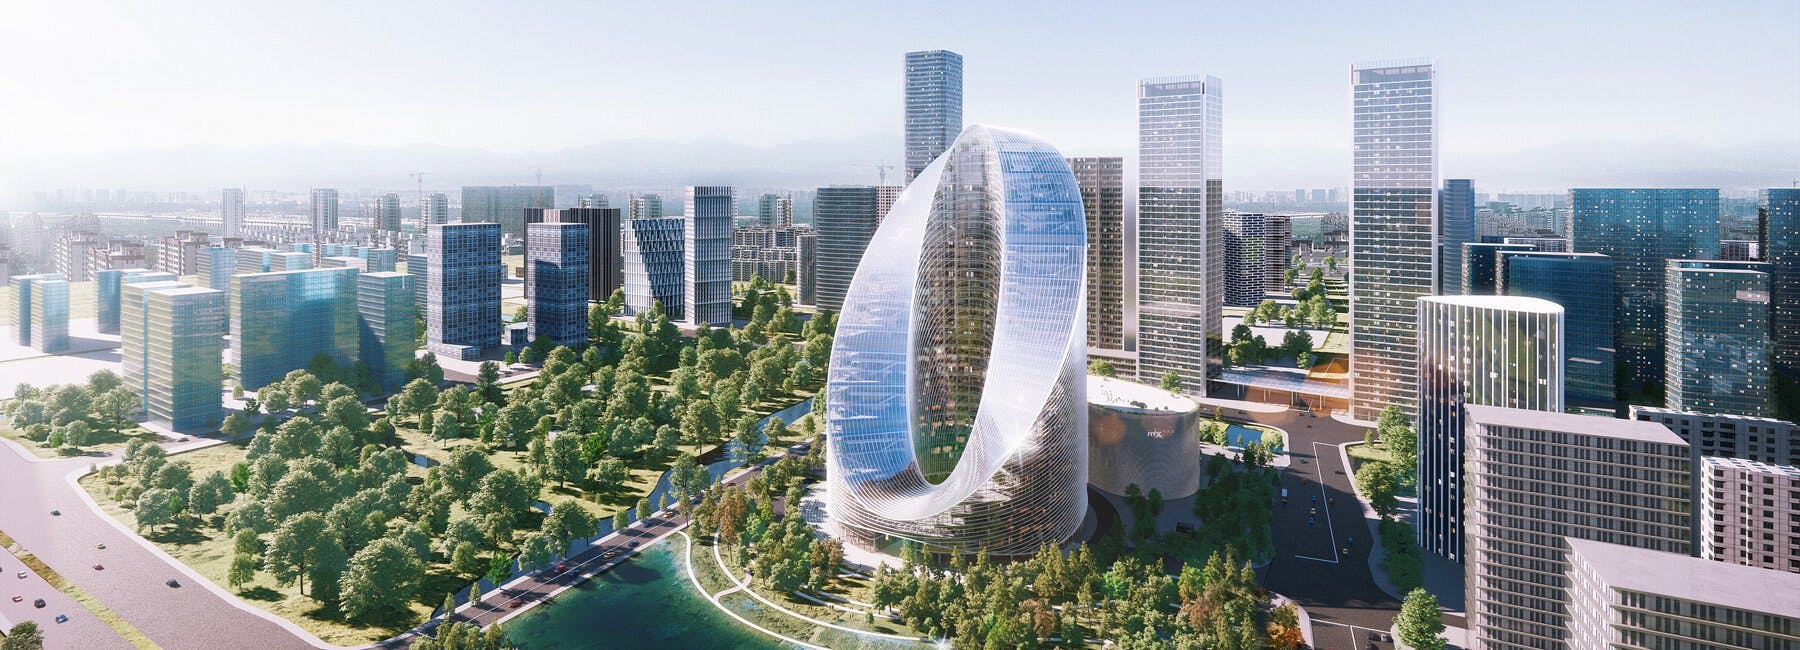 https://imgix.seoghoer.dk/big-unveils-infinity-loop-shaped-headquarters-oppo-hangzhou-designboom-1800.jpg